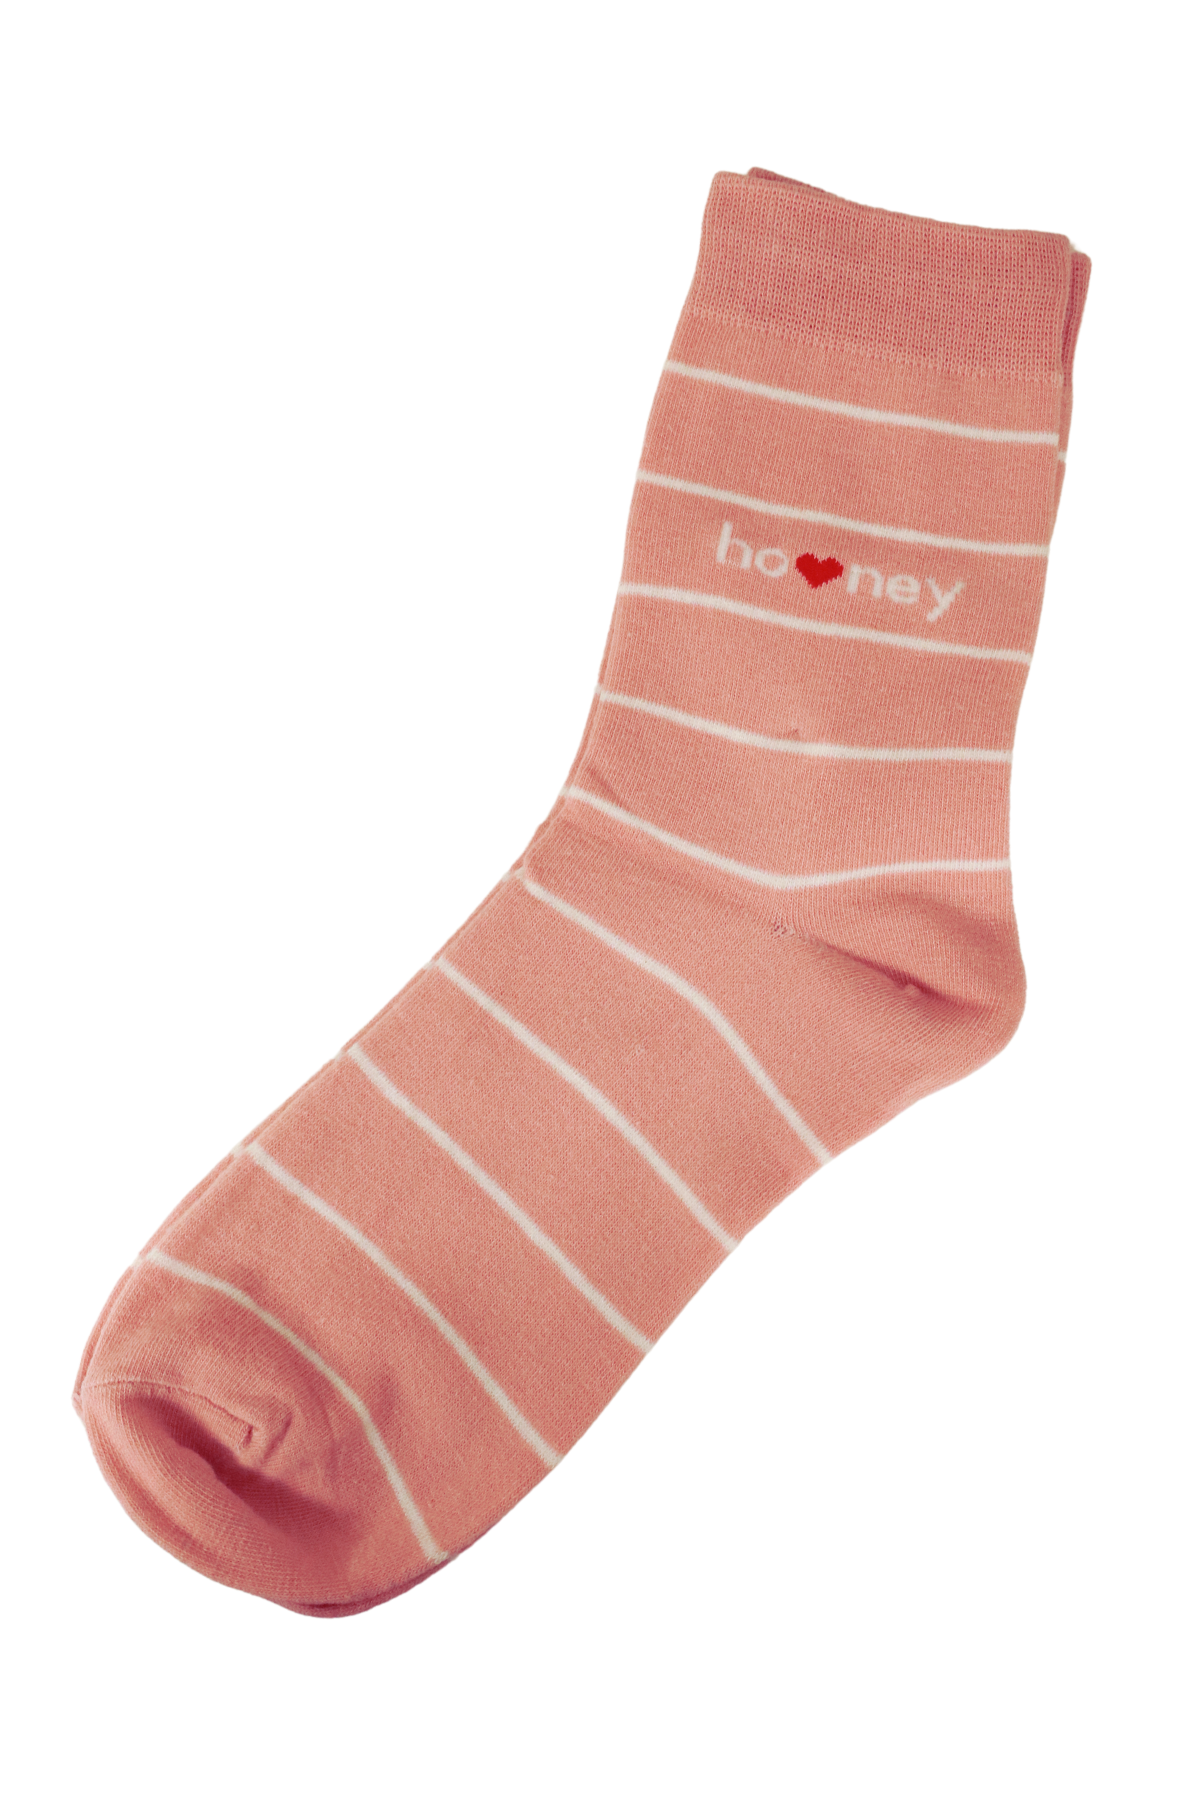 The Honey Sock Pink